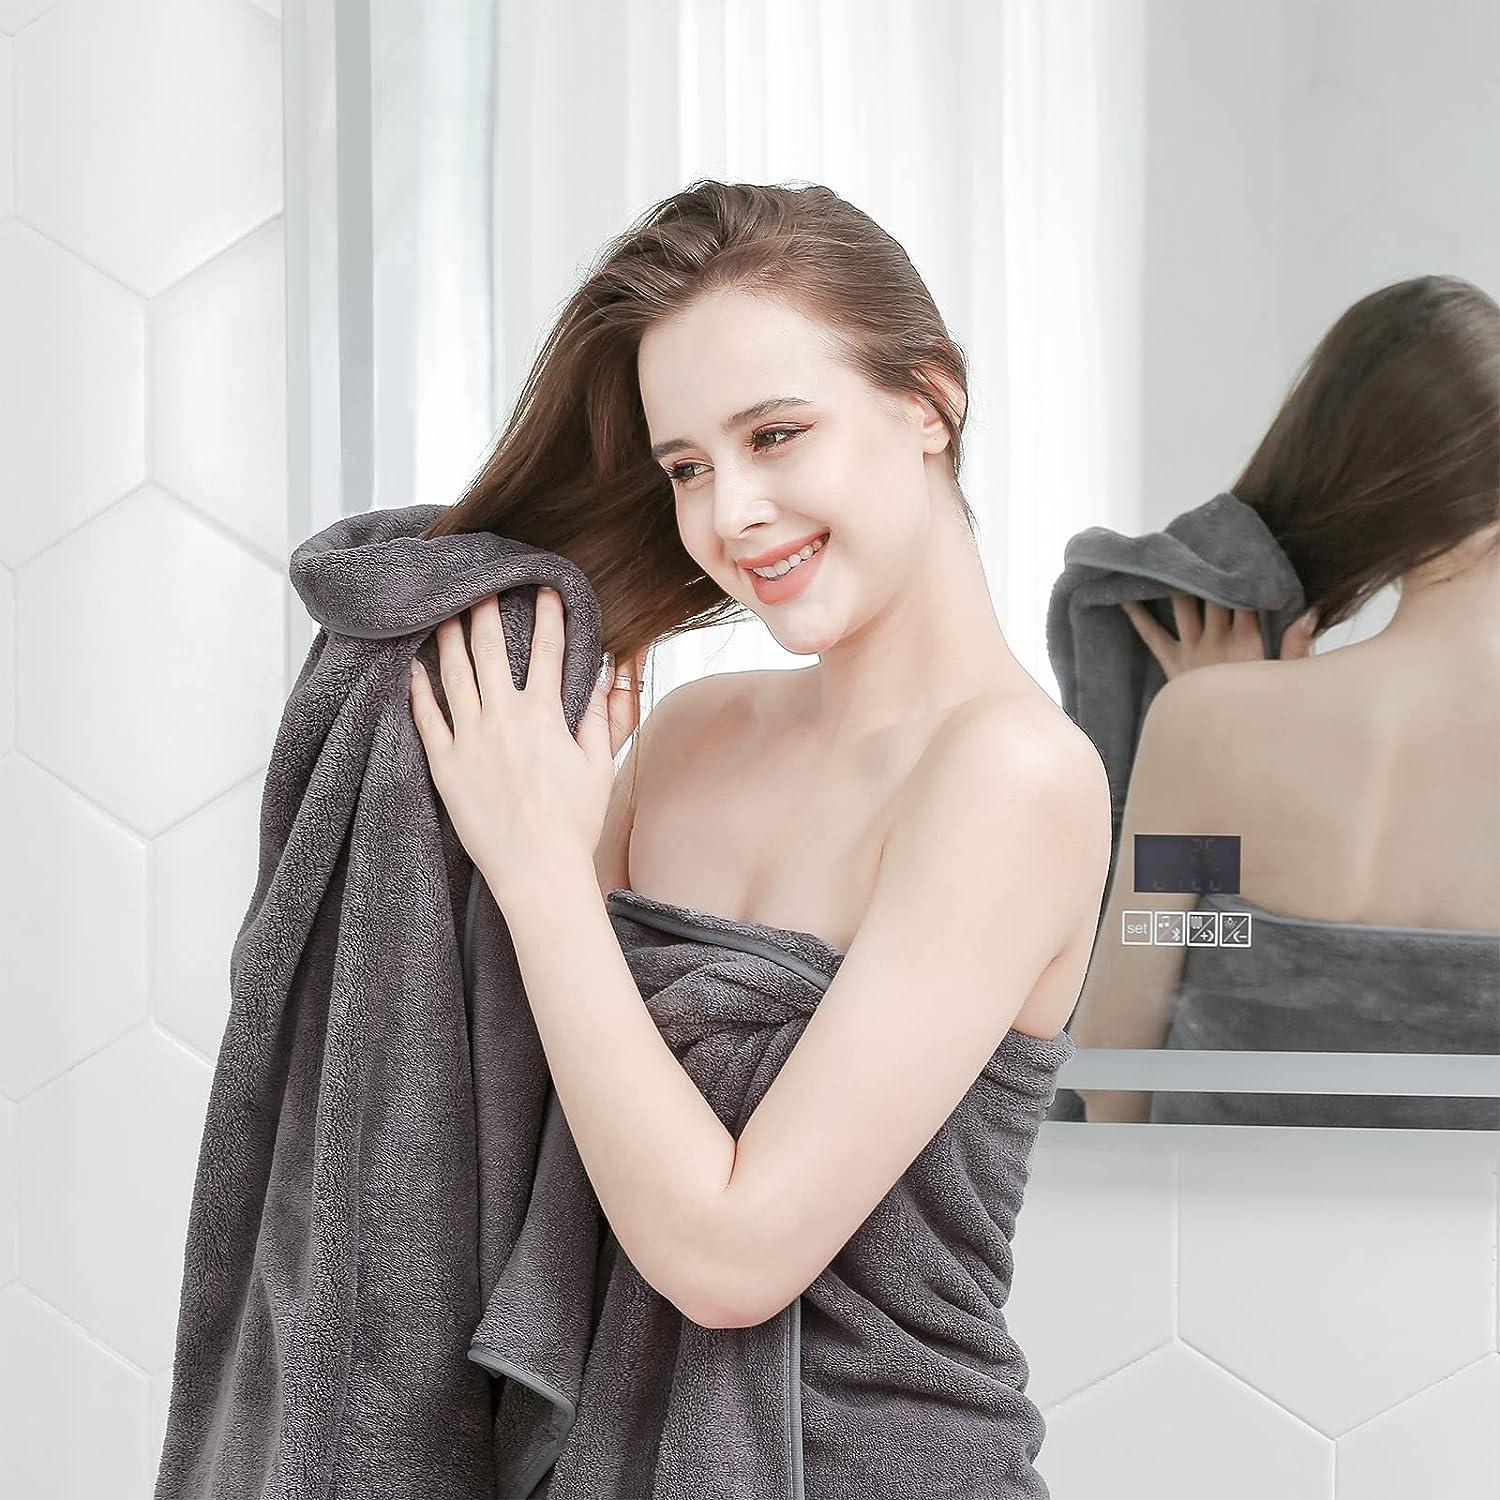 GraceAier Ultra Soft Bath Towel Set - Quick Drying - 2 Bath Towels